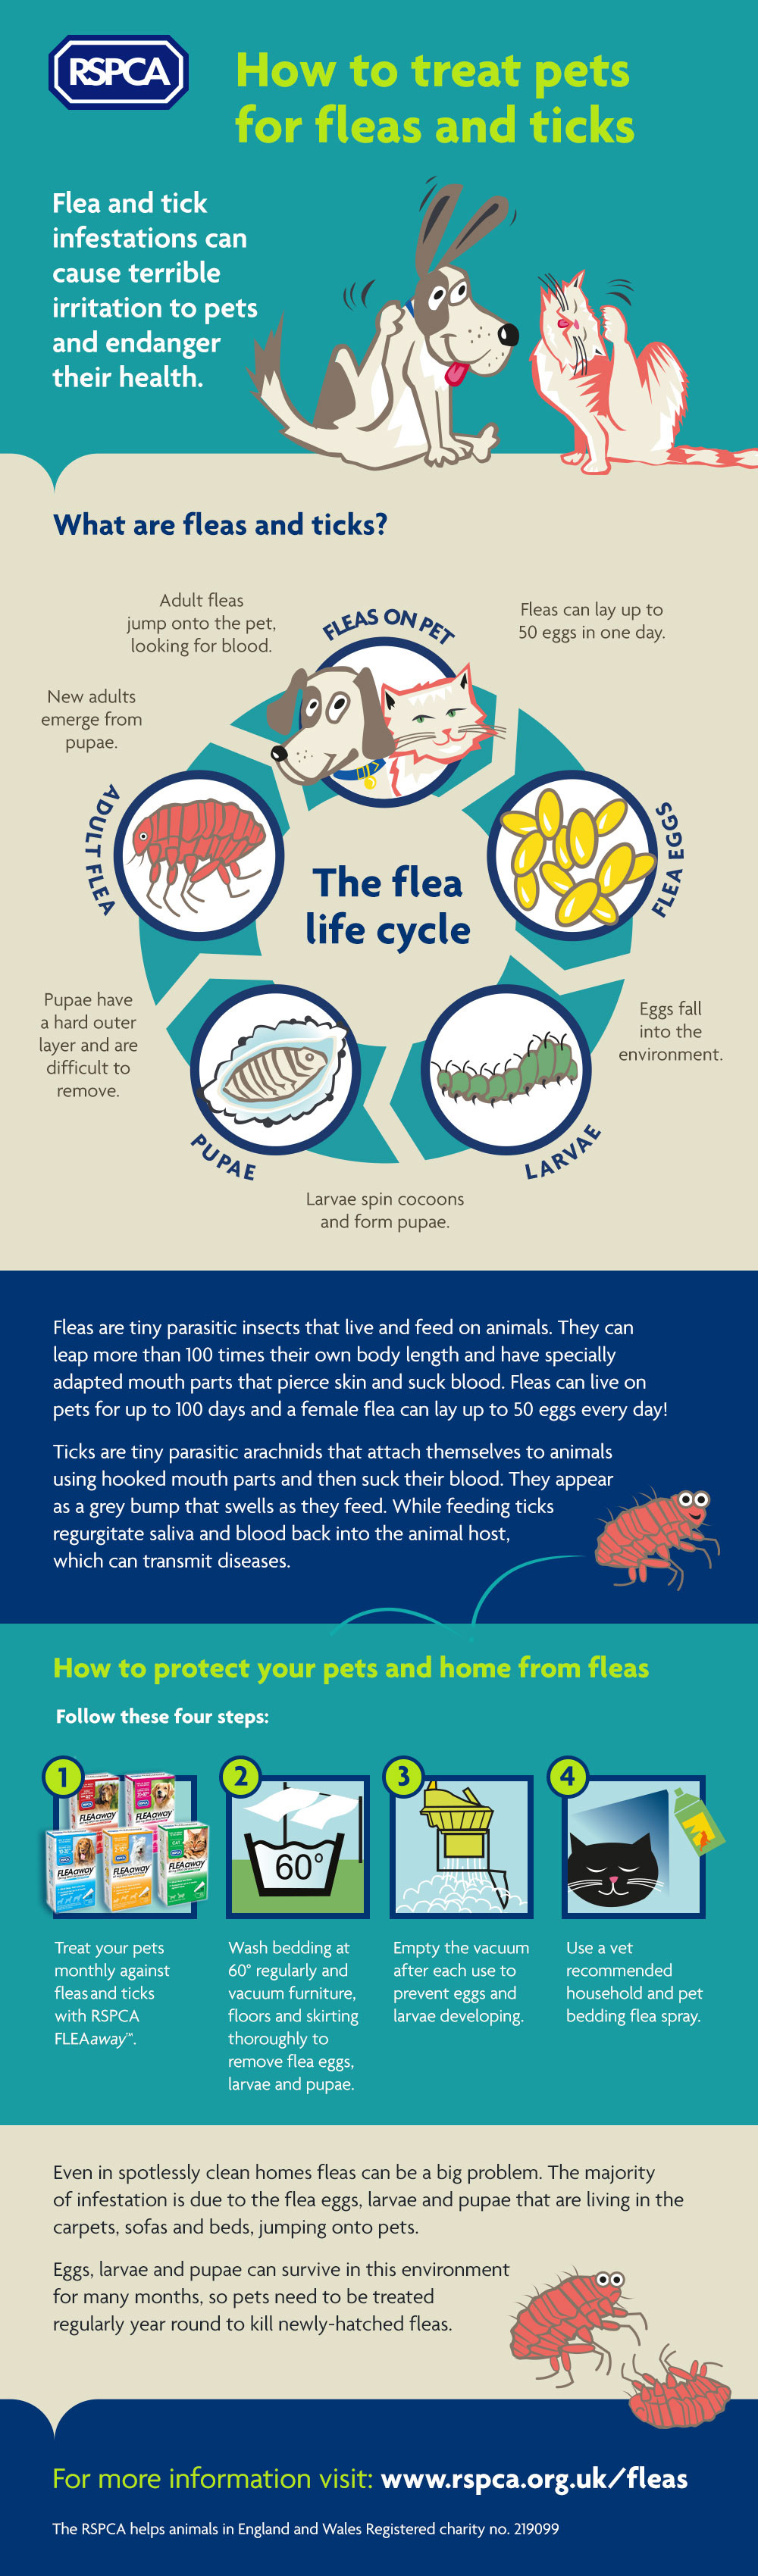 RSPCA Fleas Infographic